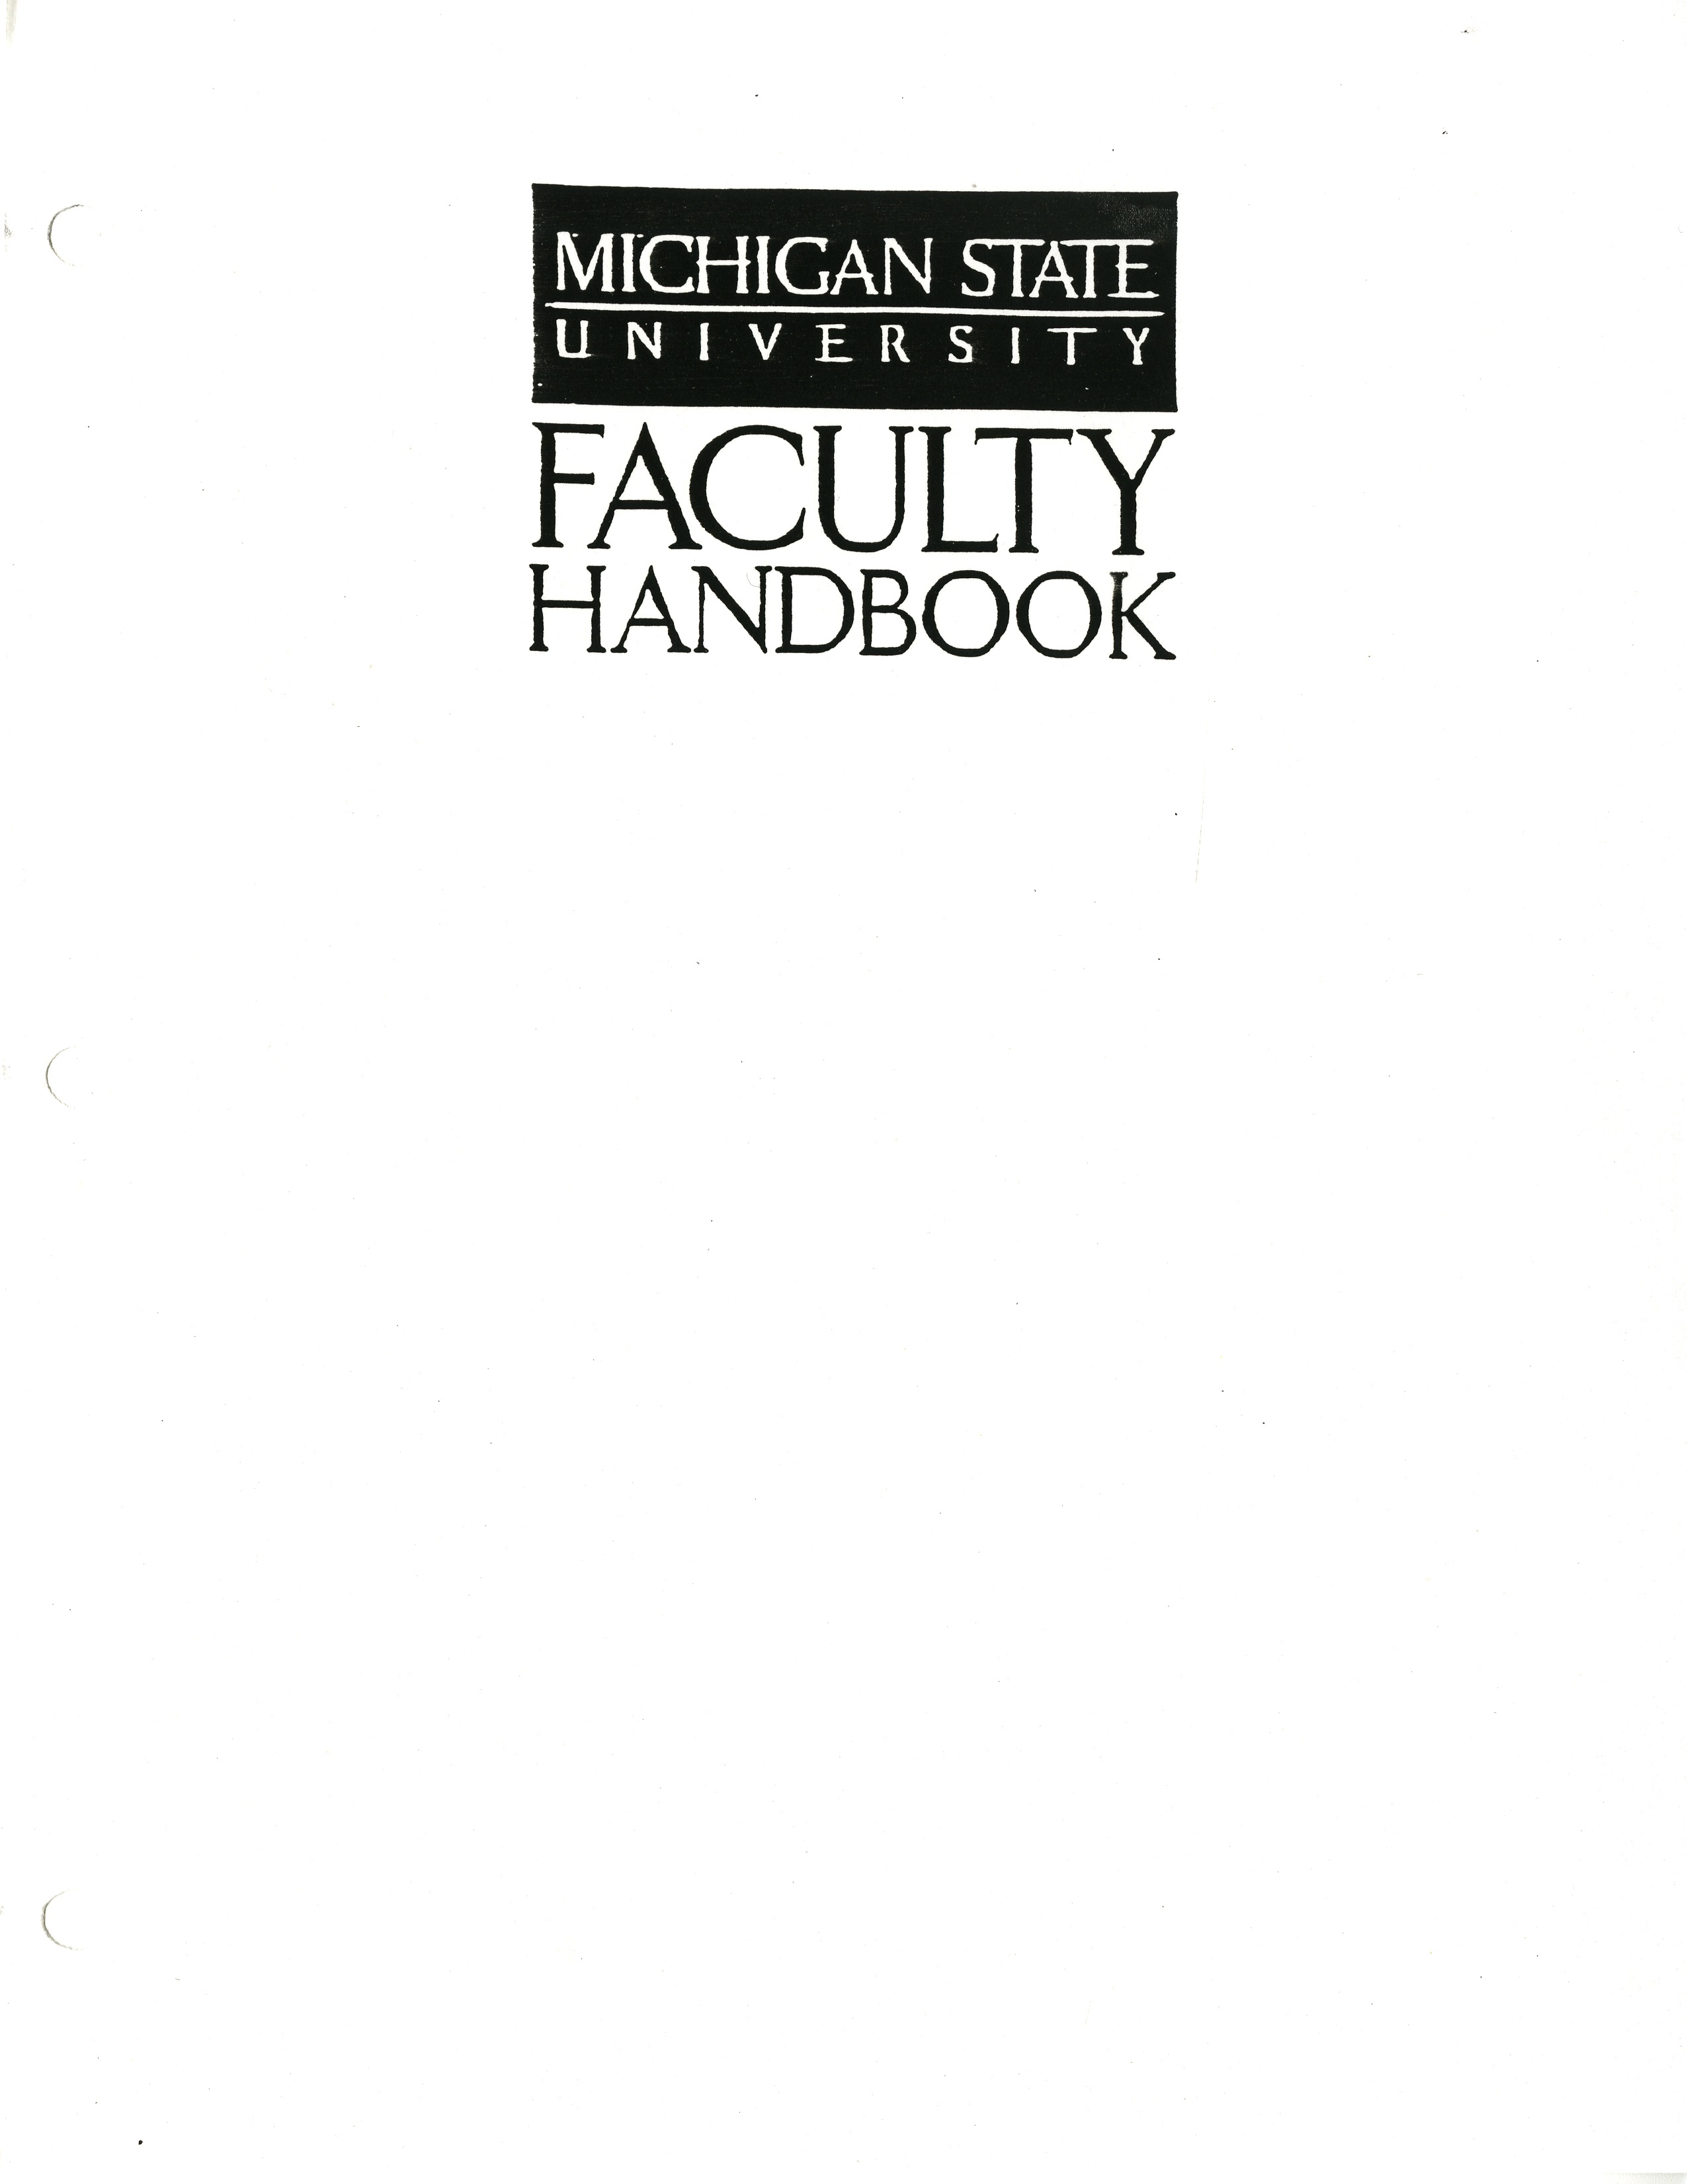 Faculty Handbook, 1991